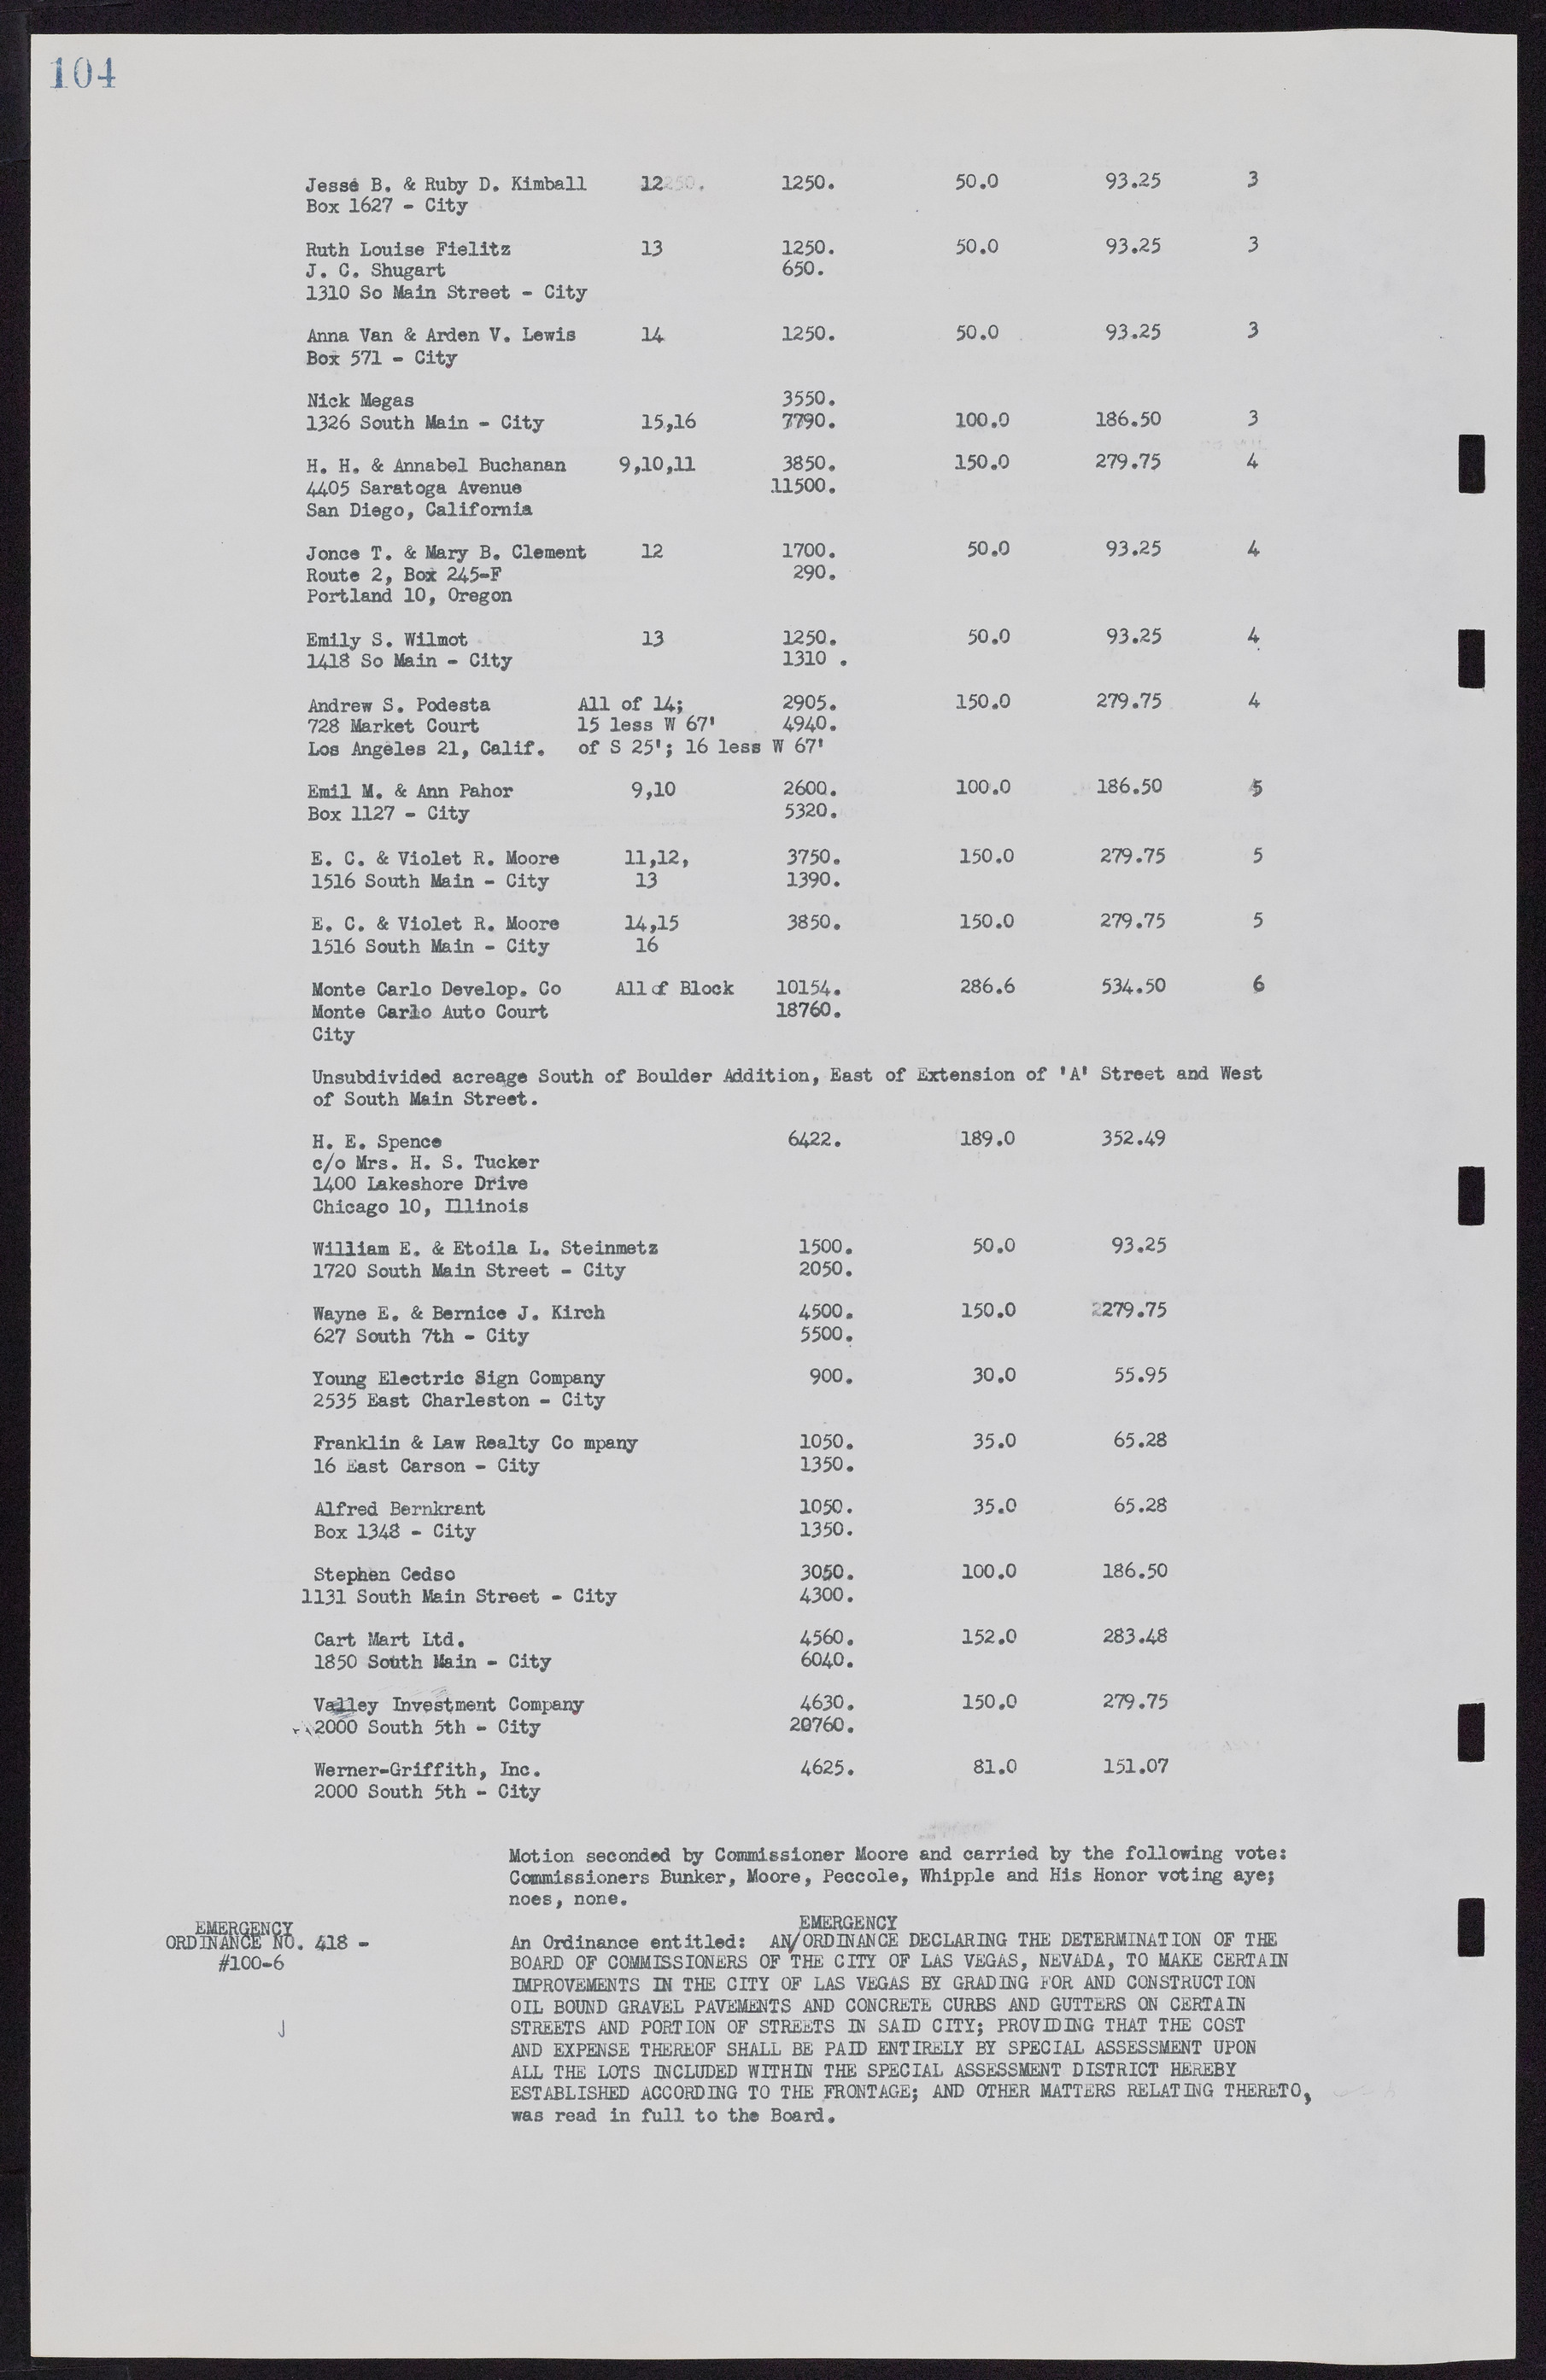 Las Vegas City Commission Minutes, November 7, 1949 to May 21, 1952, lvc000007-112